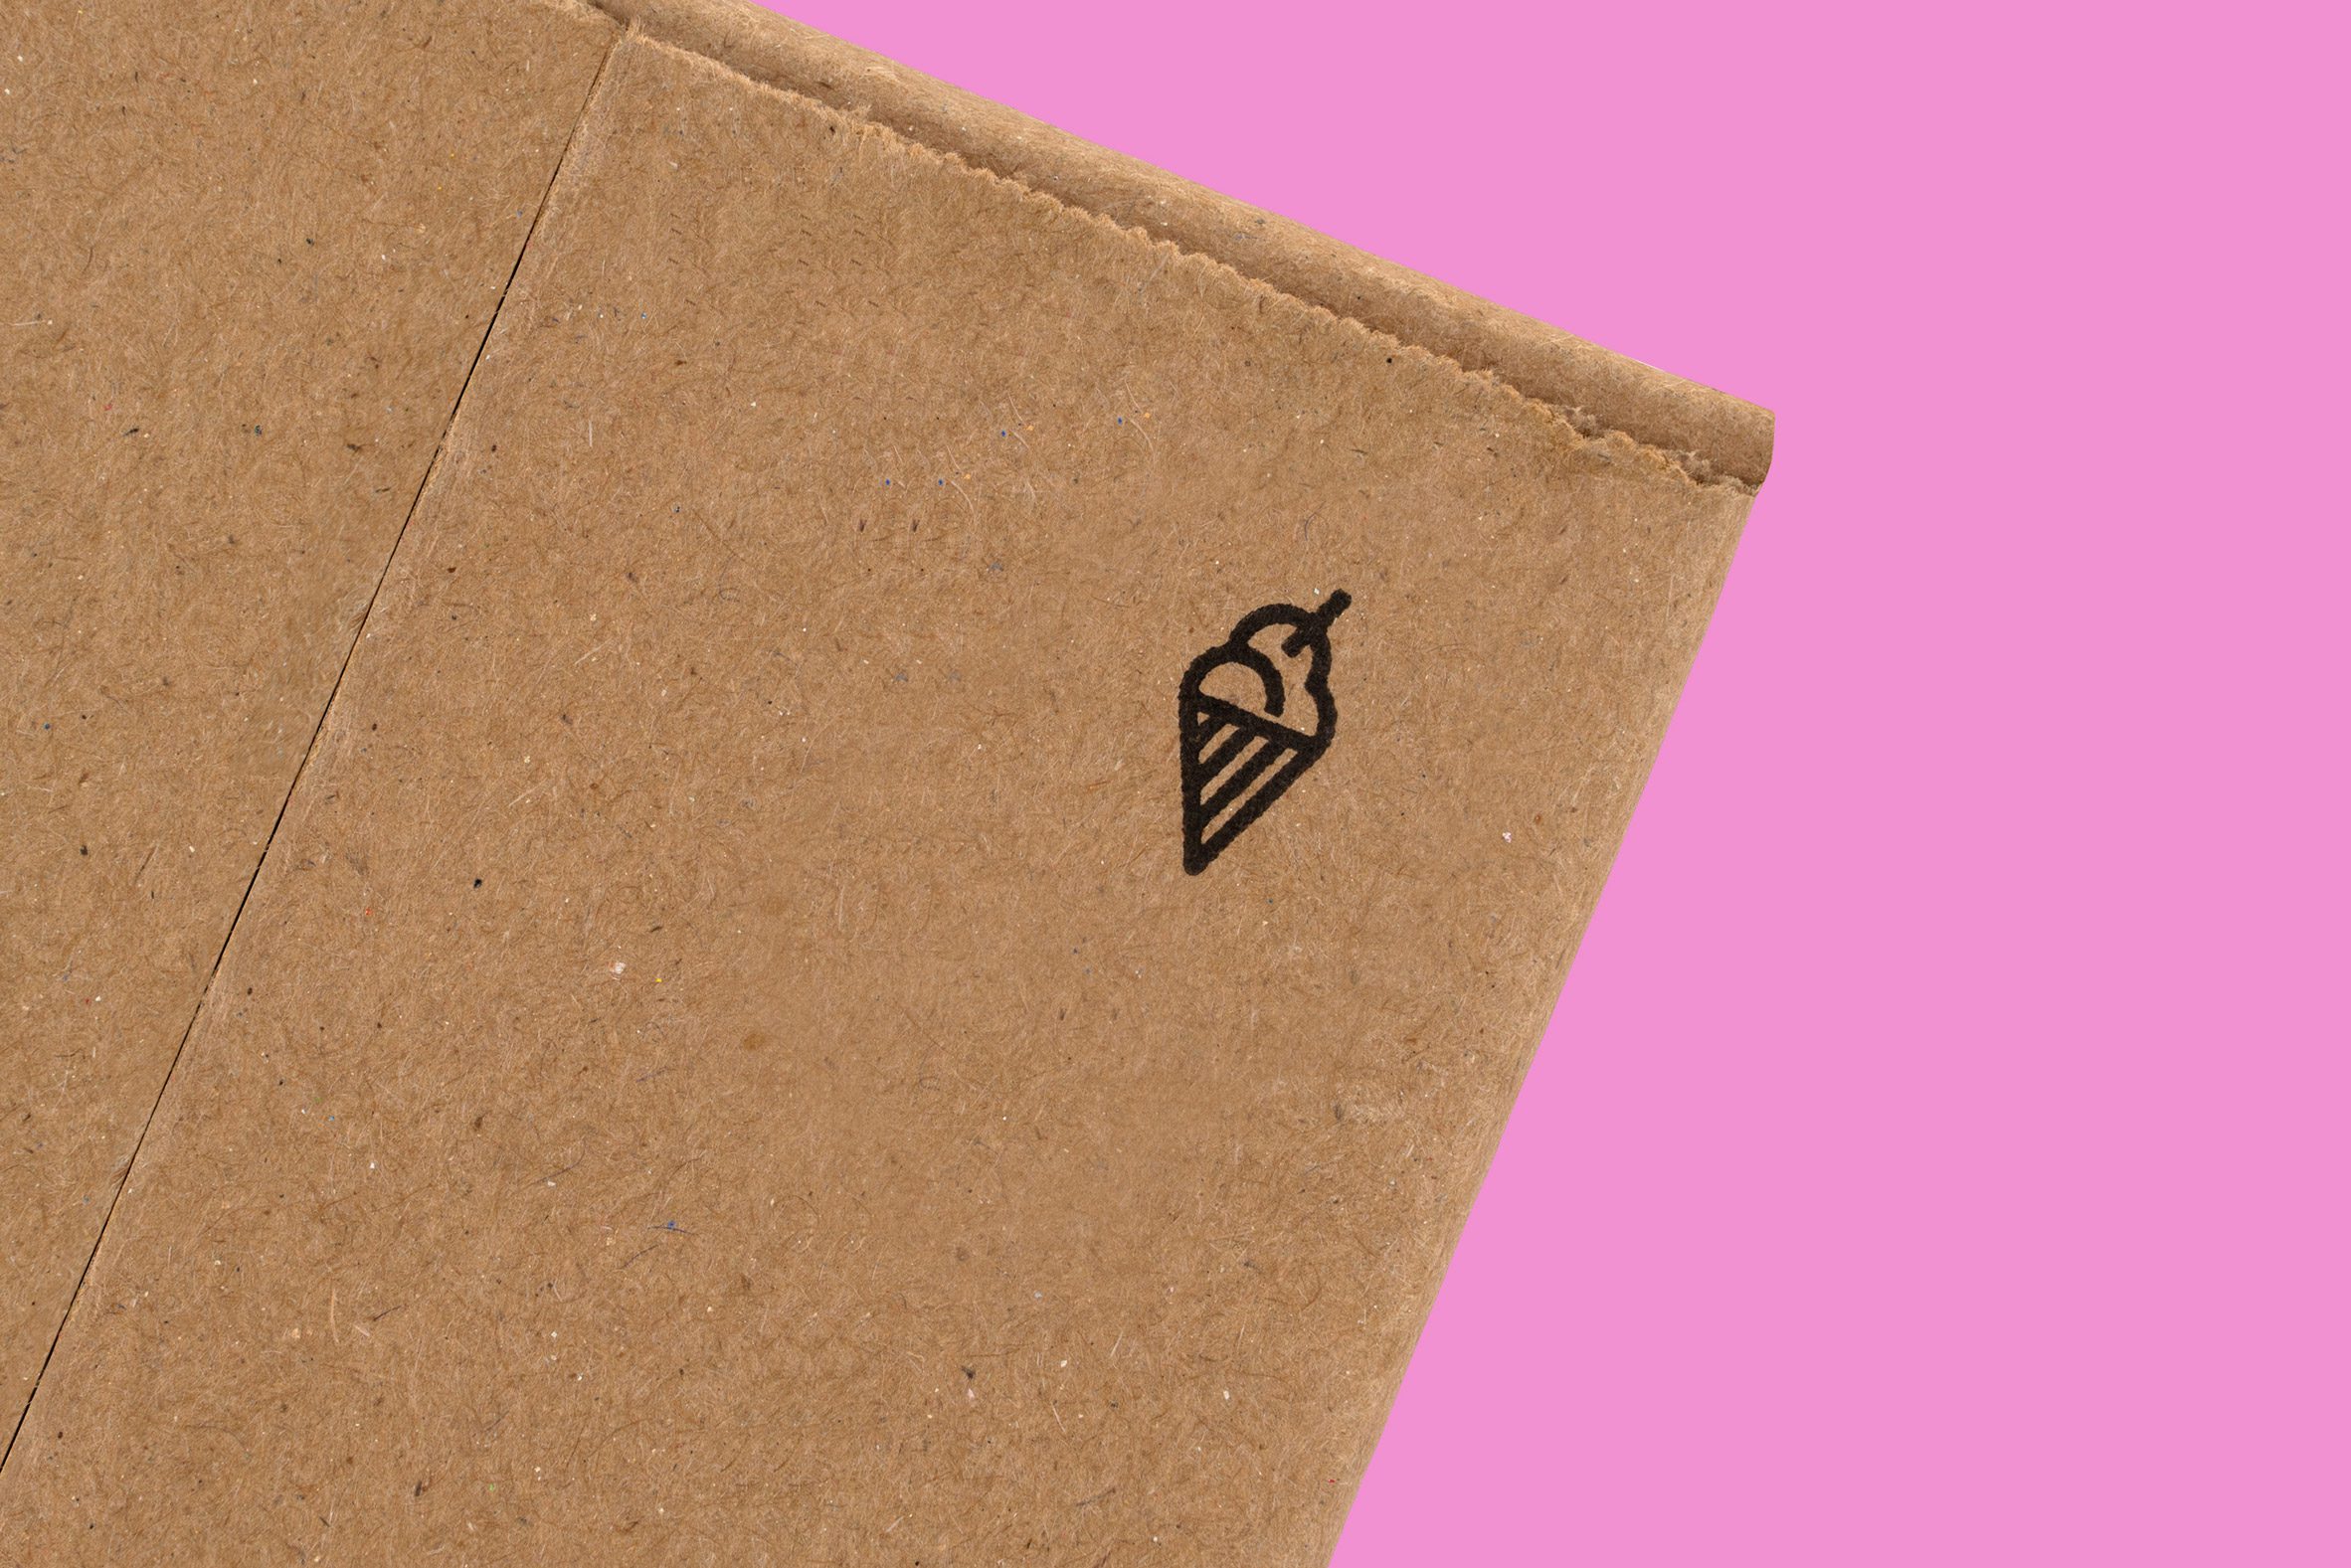 Icecream cone insignia on cardboard box